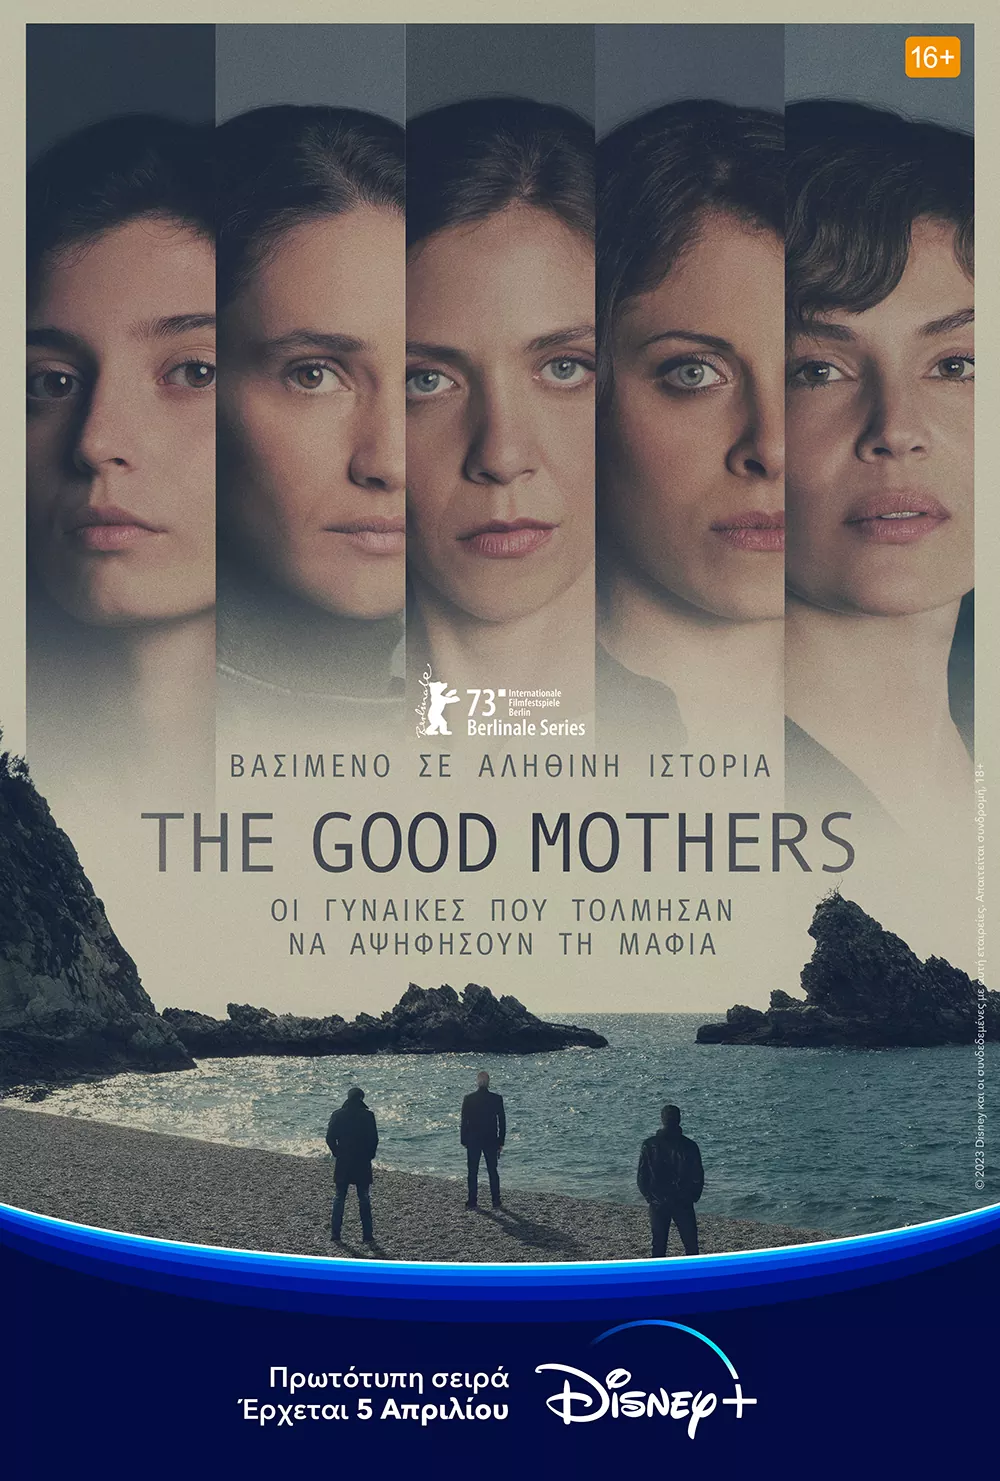 Trailer Από Τη Νέα Σειρά "The Good Mothers"